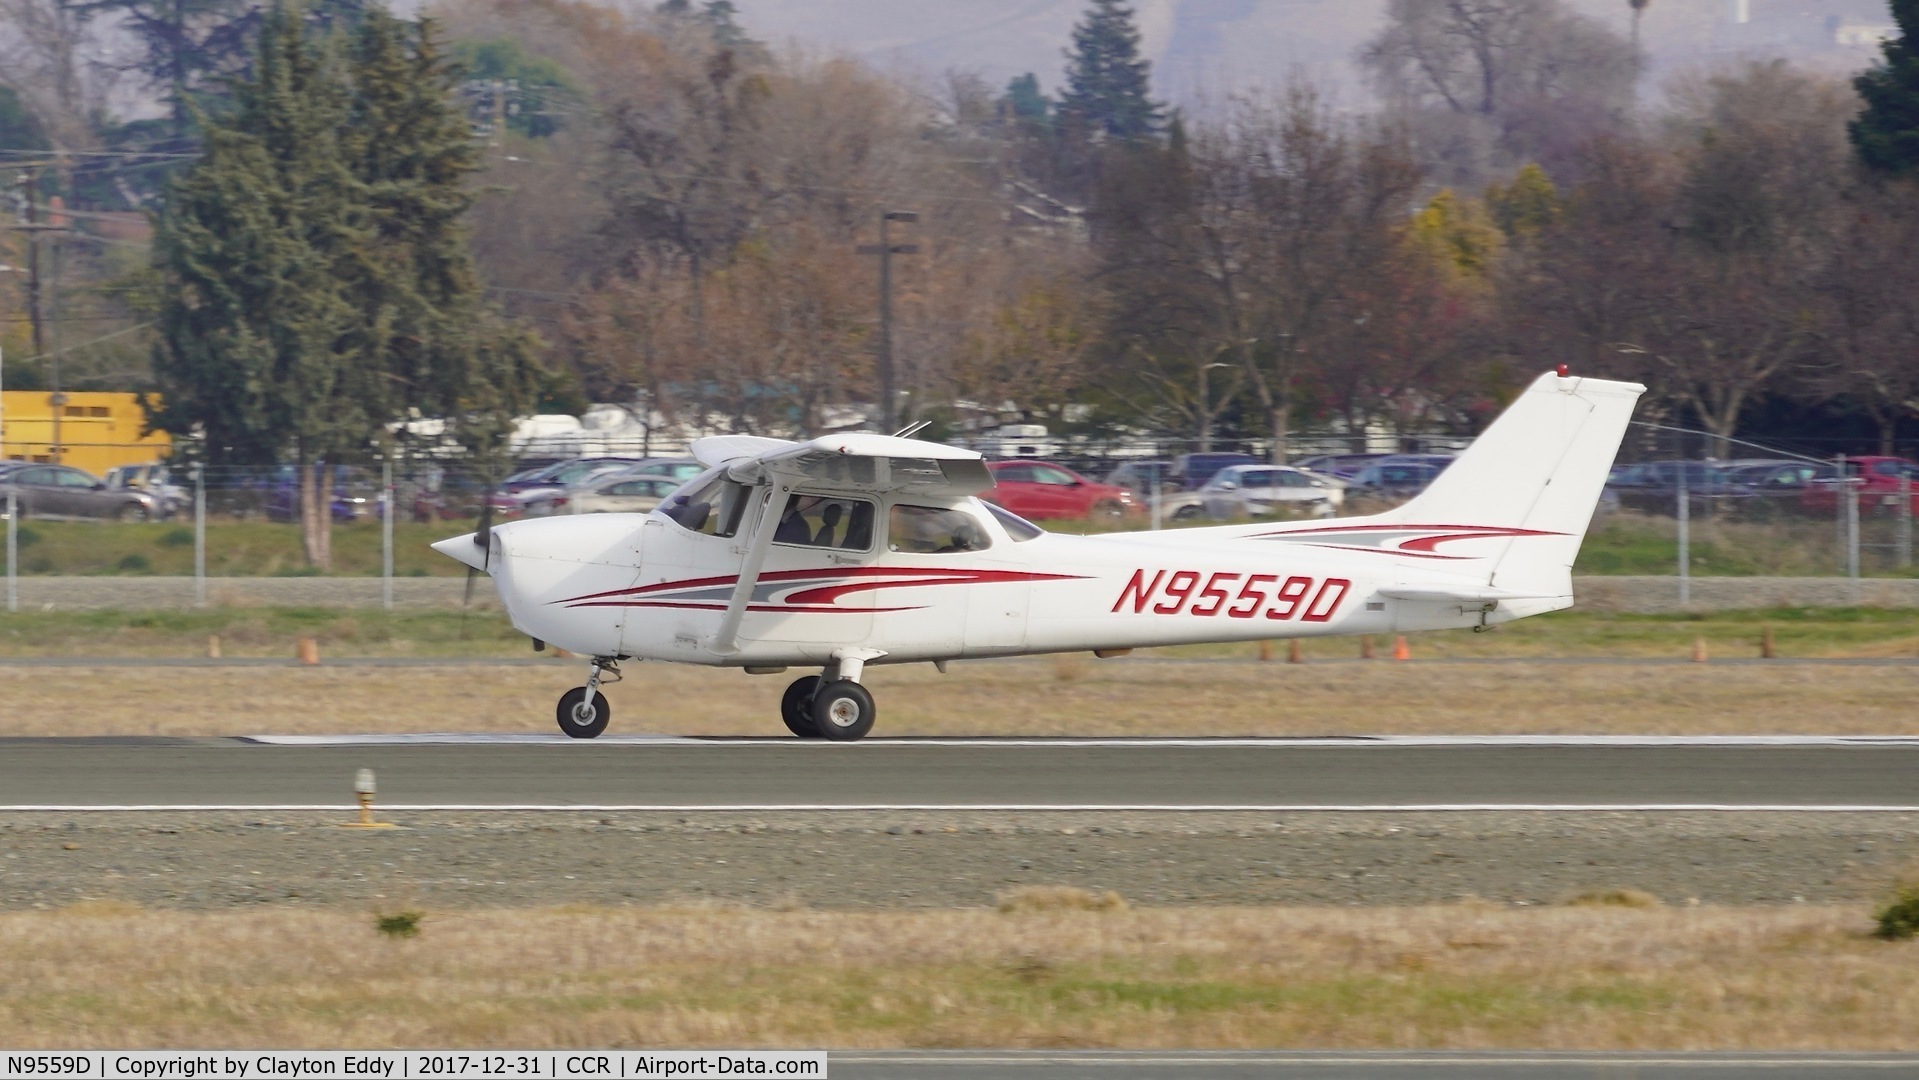 N9559D, 1999 Cessna 172R C/N 17280488, Takeoff runway 32R at Buchanan Field Concord California 2017.